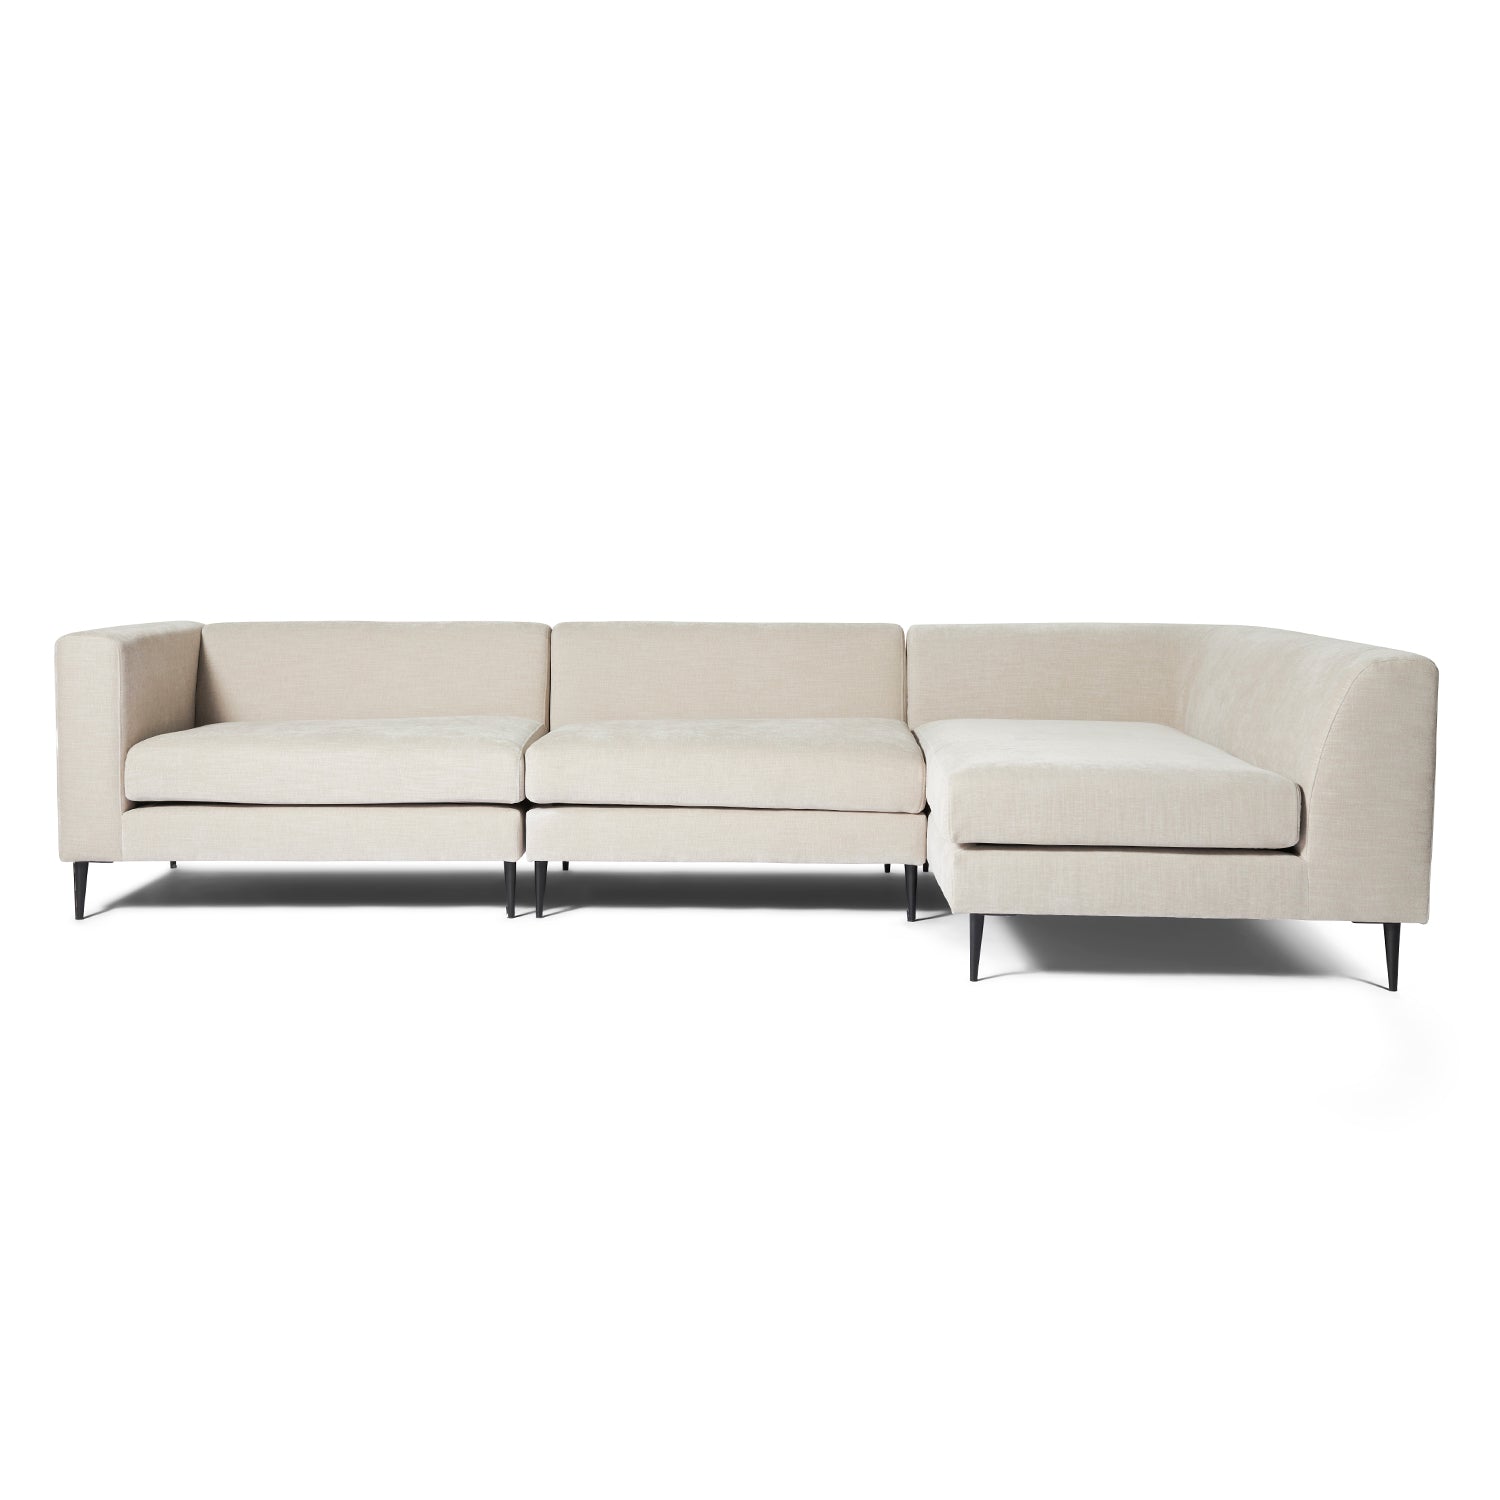 Malaga chaiselong sofa højrevendt - Møbelkompagniet